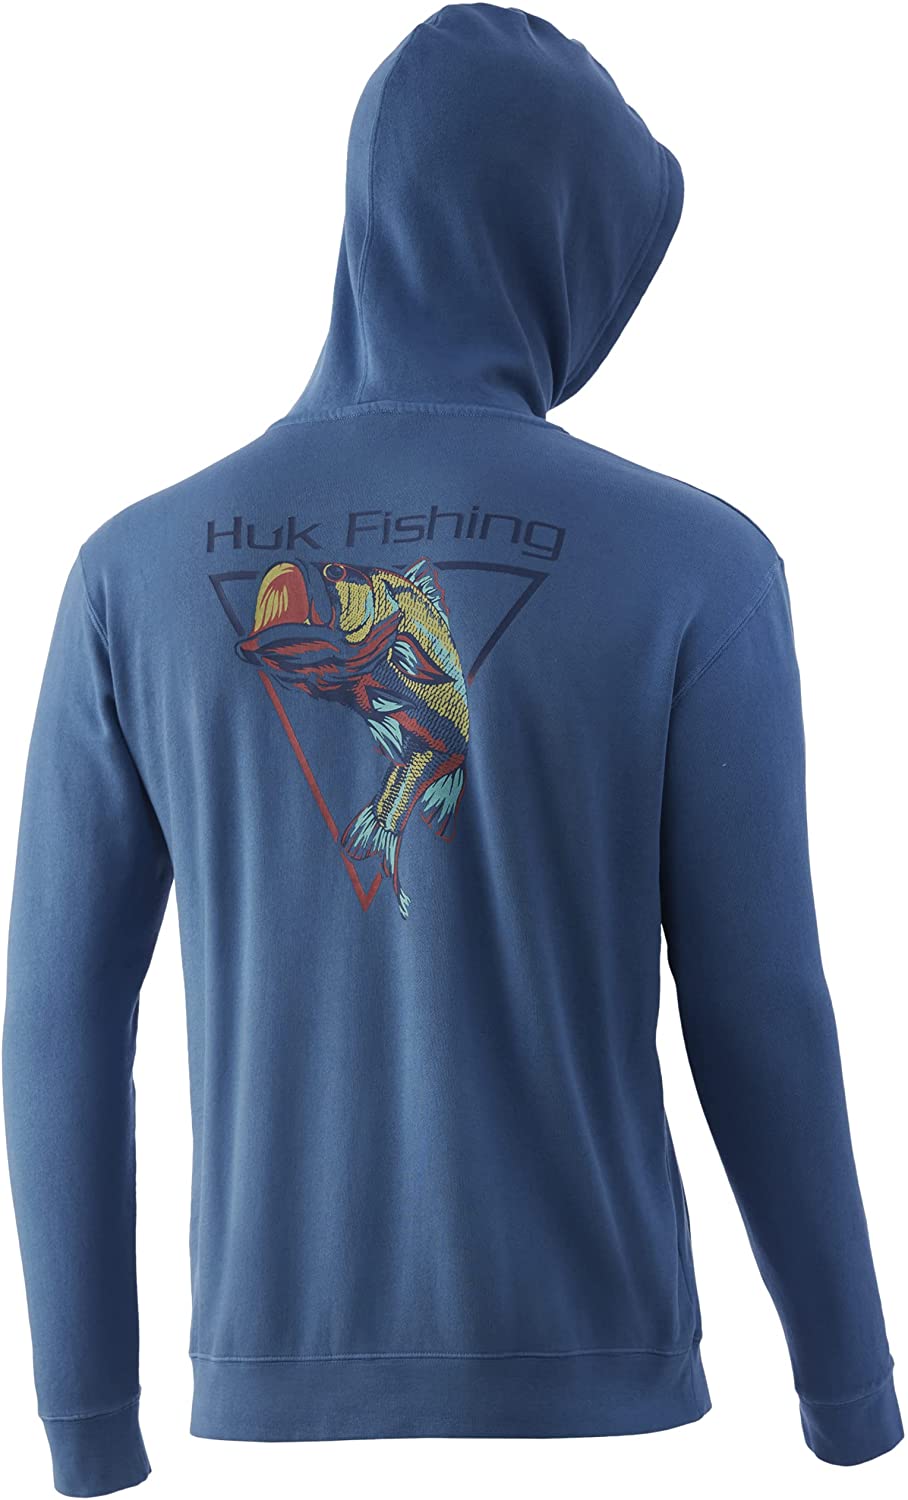 HUK mens Performance Fleece Fishing Hoodie, HUK Logo - Black, Small at   Men's Clothing store